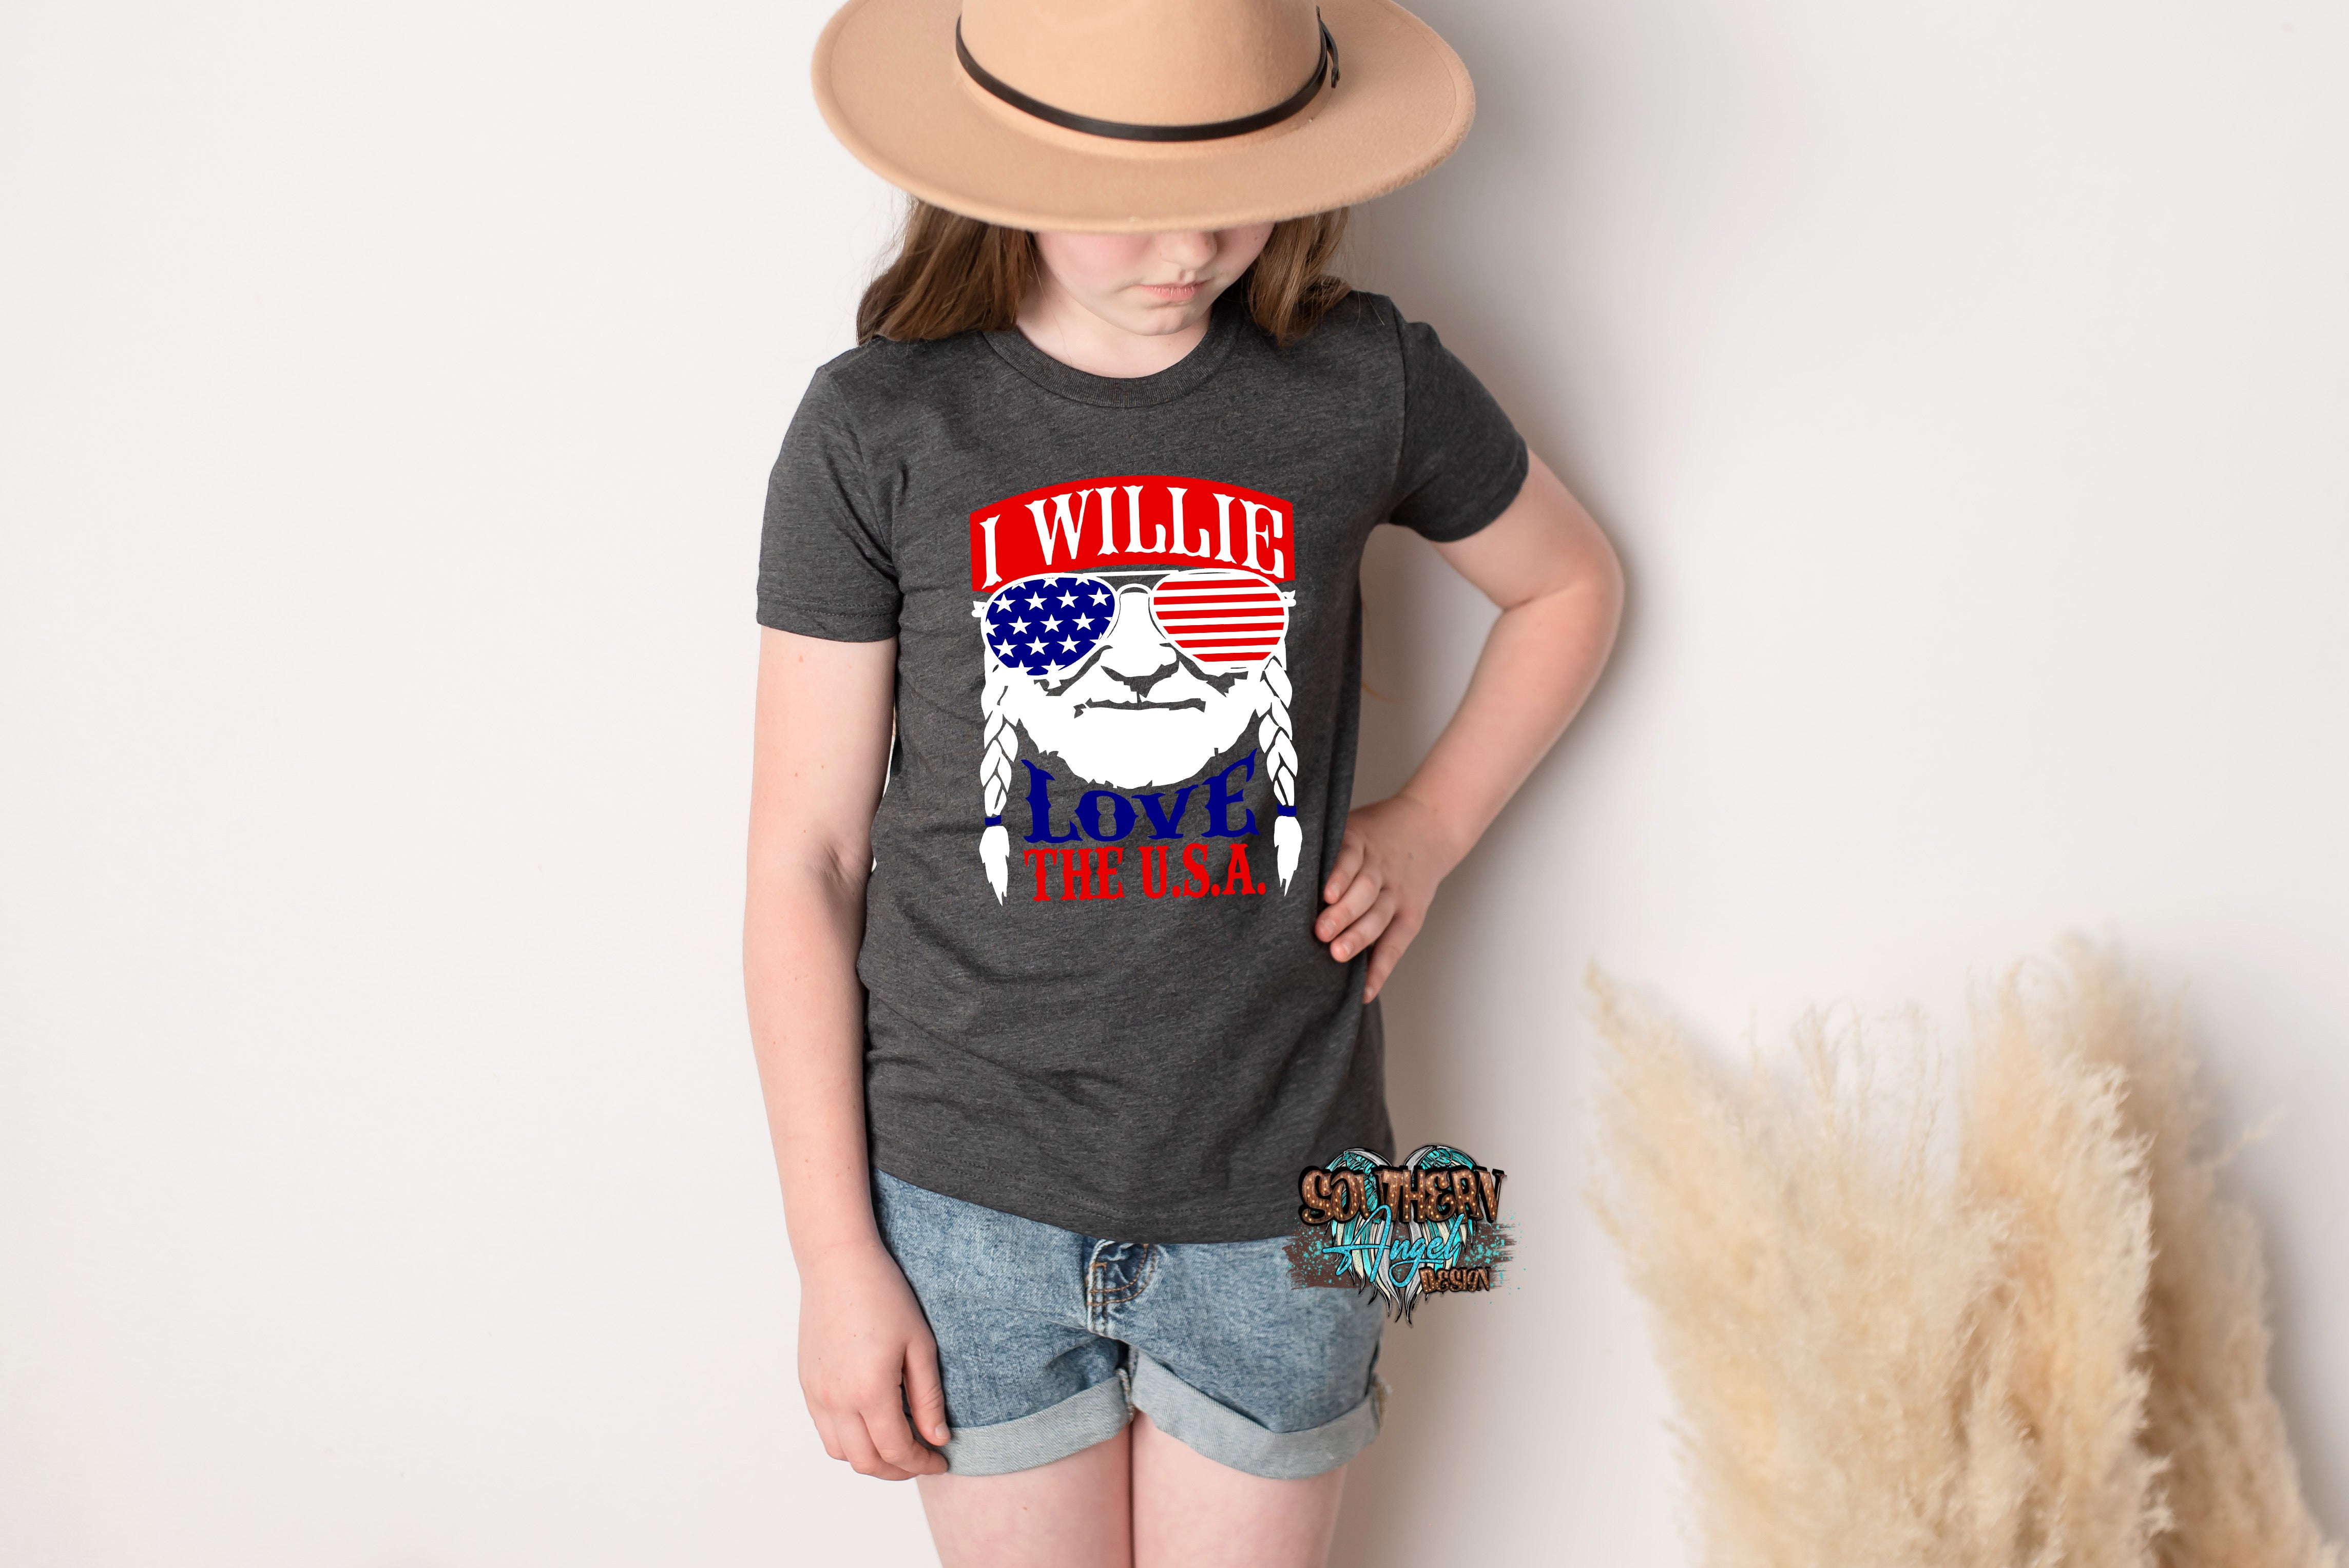 Antique White I Willie Love The USA t-shirt image_bbafe93b-650f-4aa8-9712-5e30112701dd.jpg i-willie-love-the-usa-t-shirt Kids Patriotic